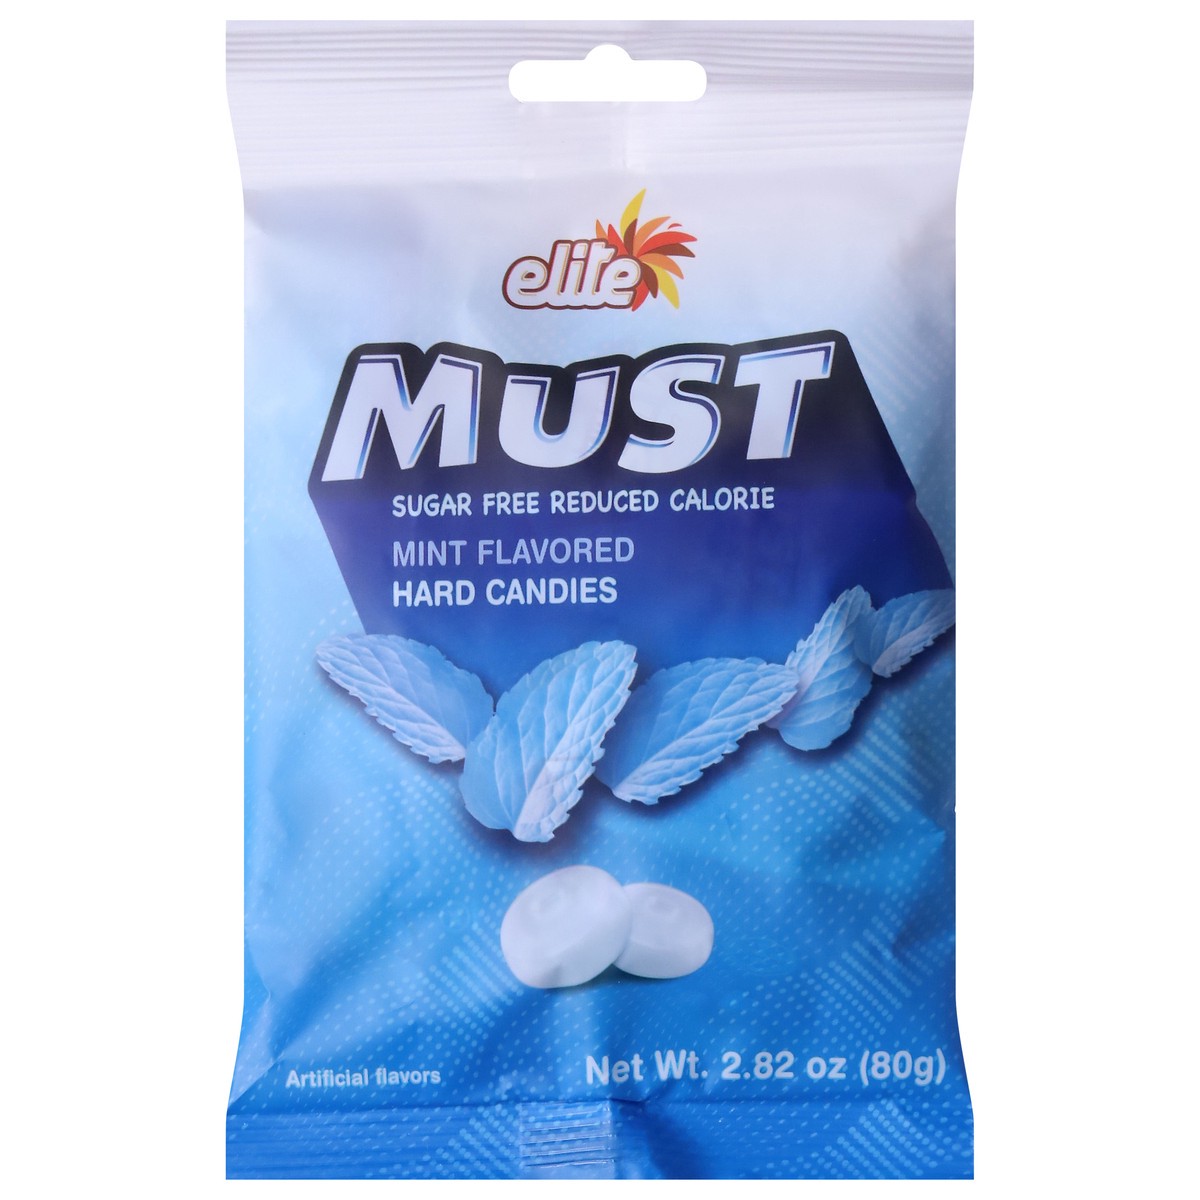 slide 1 of 3, Elite Must Mint Flavored Hard Candies 2.82 oz, 2.82 oz